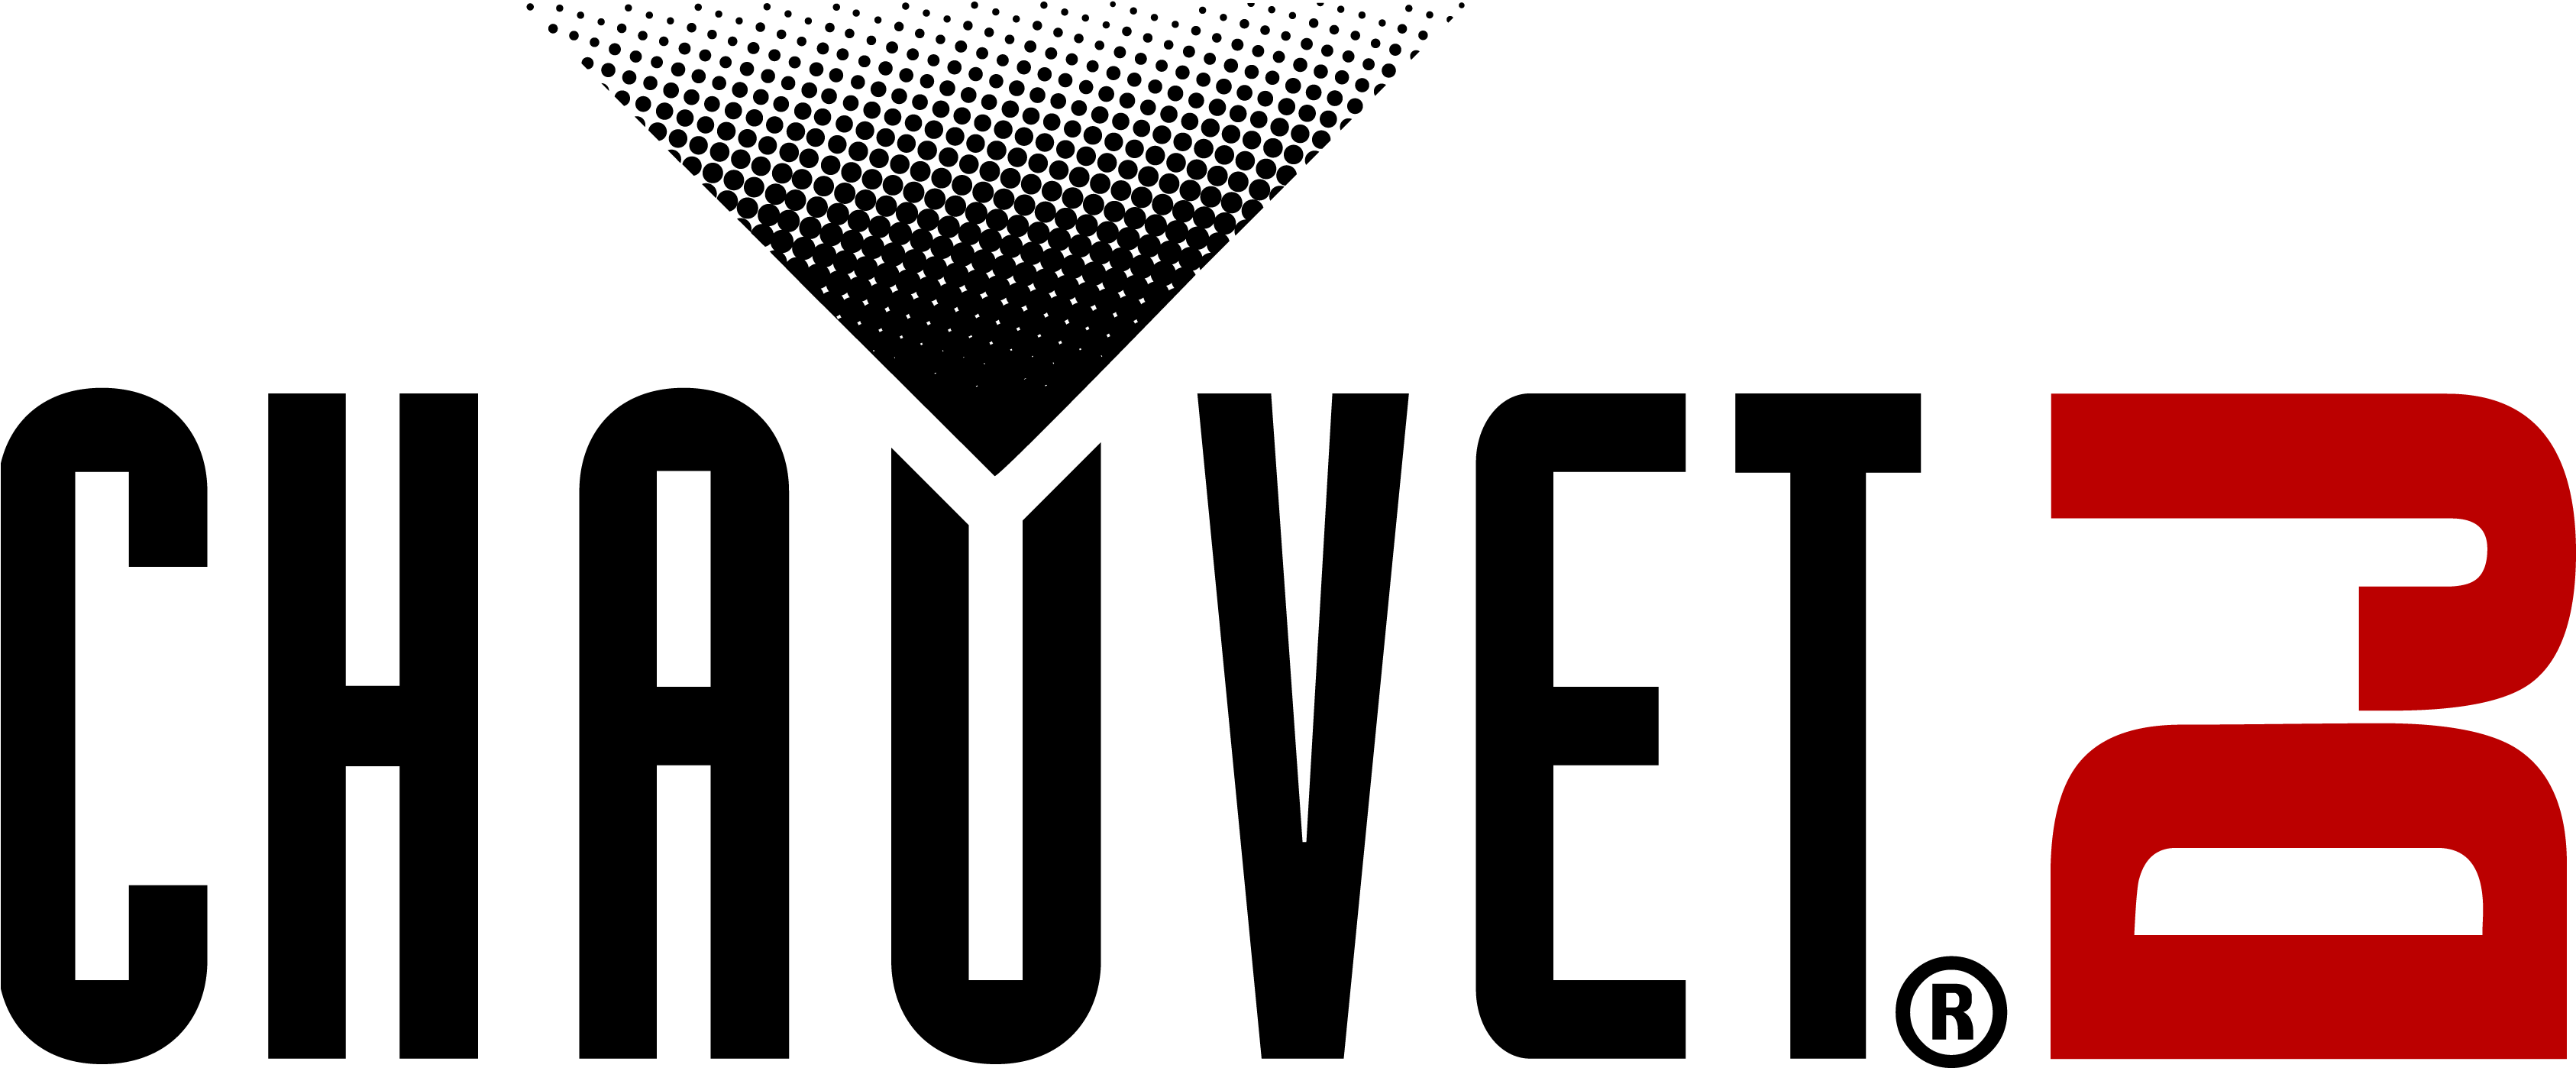 Download Chauvet Logo Dj Logo - Chauvet Dj Logo PNG Image with No Background  